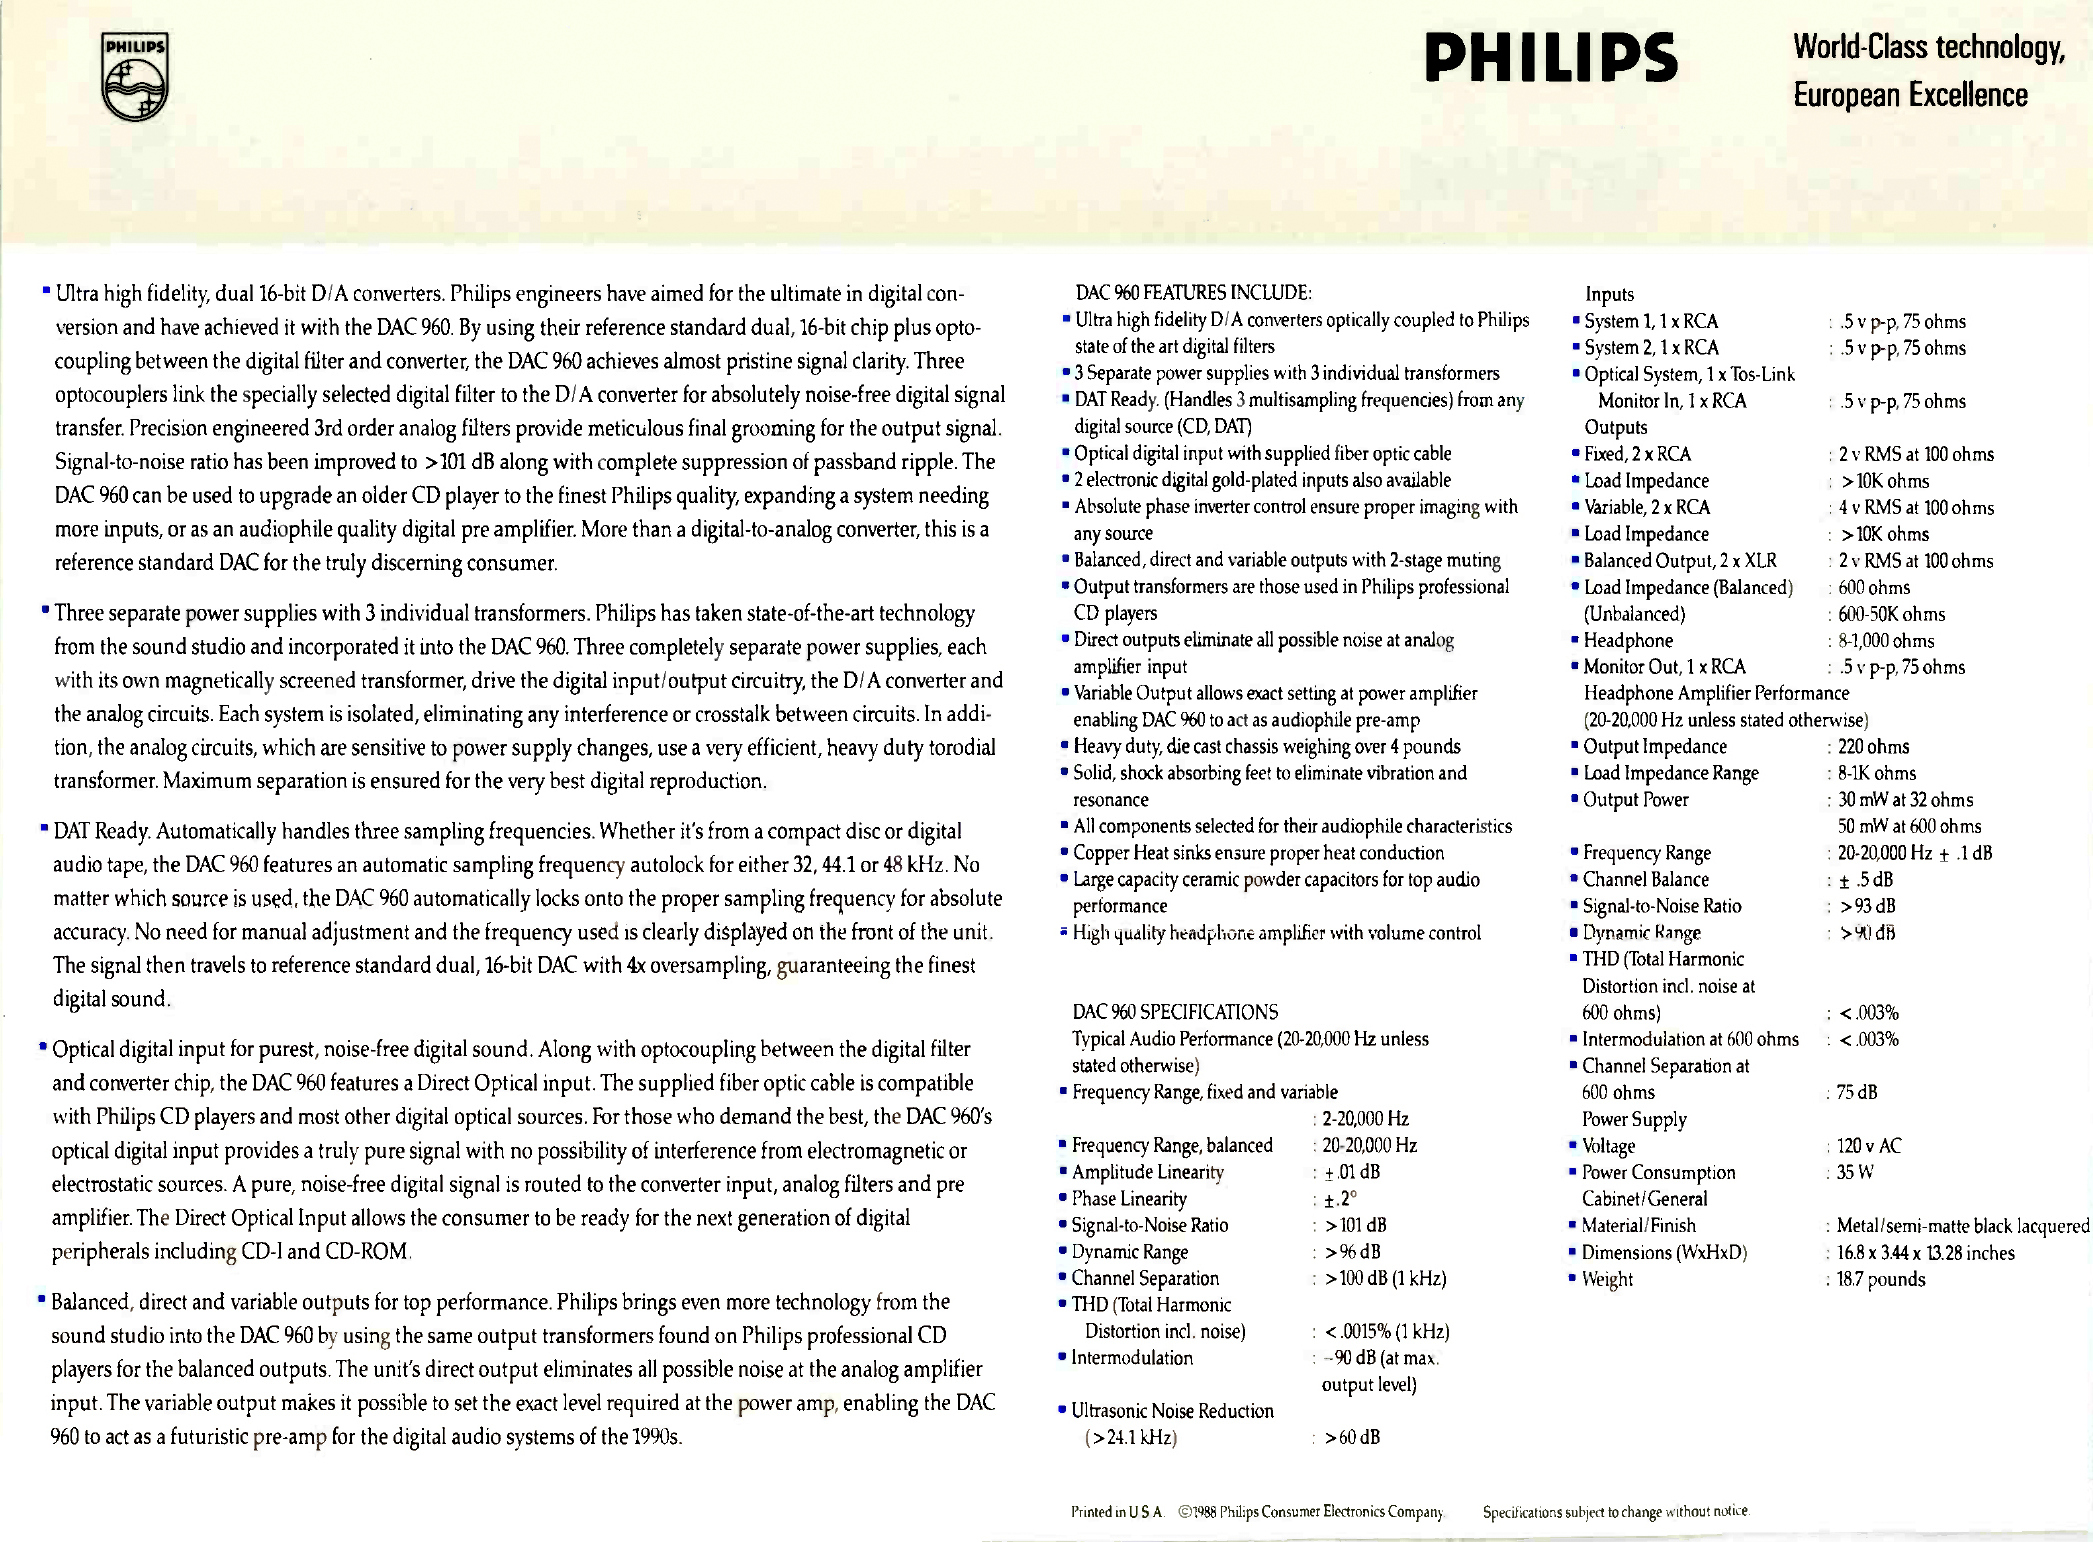 1988 Philips Audio-11.jpg